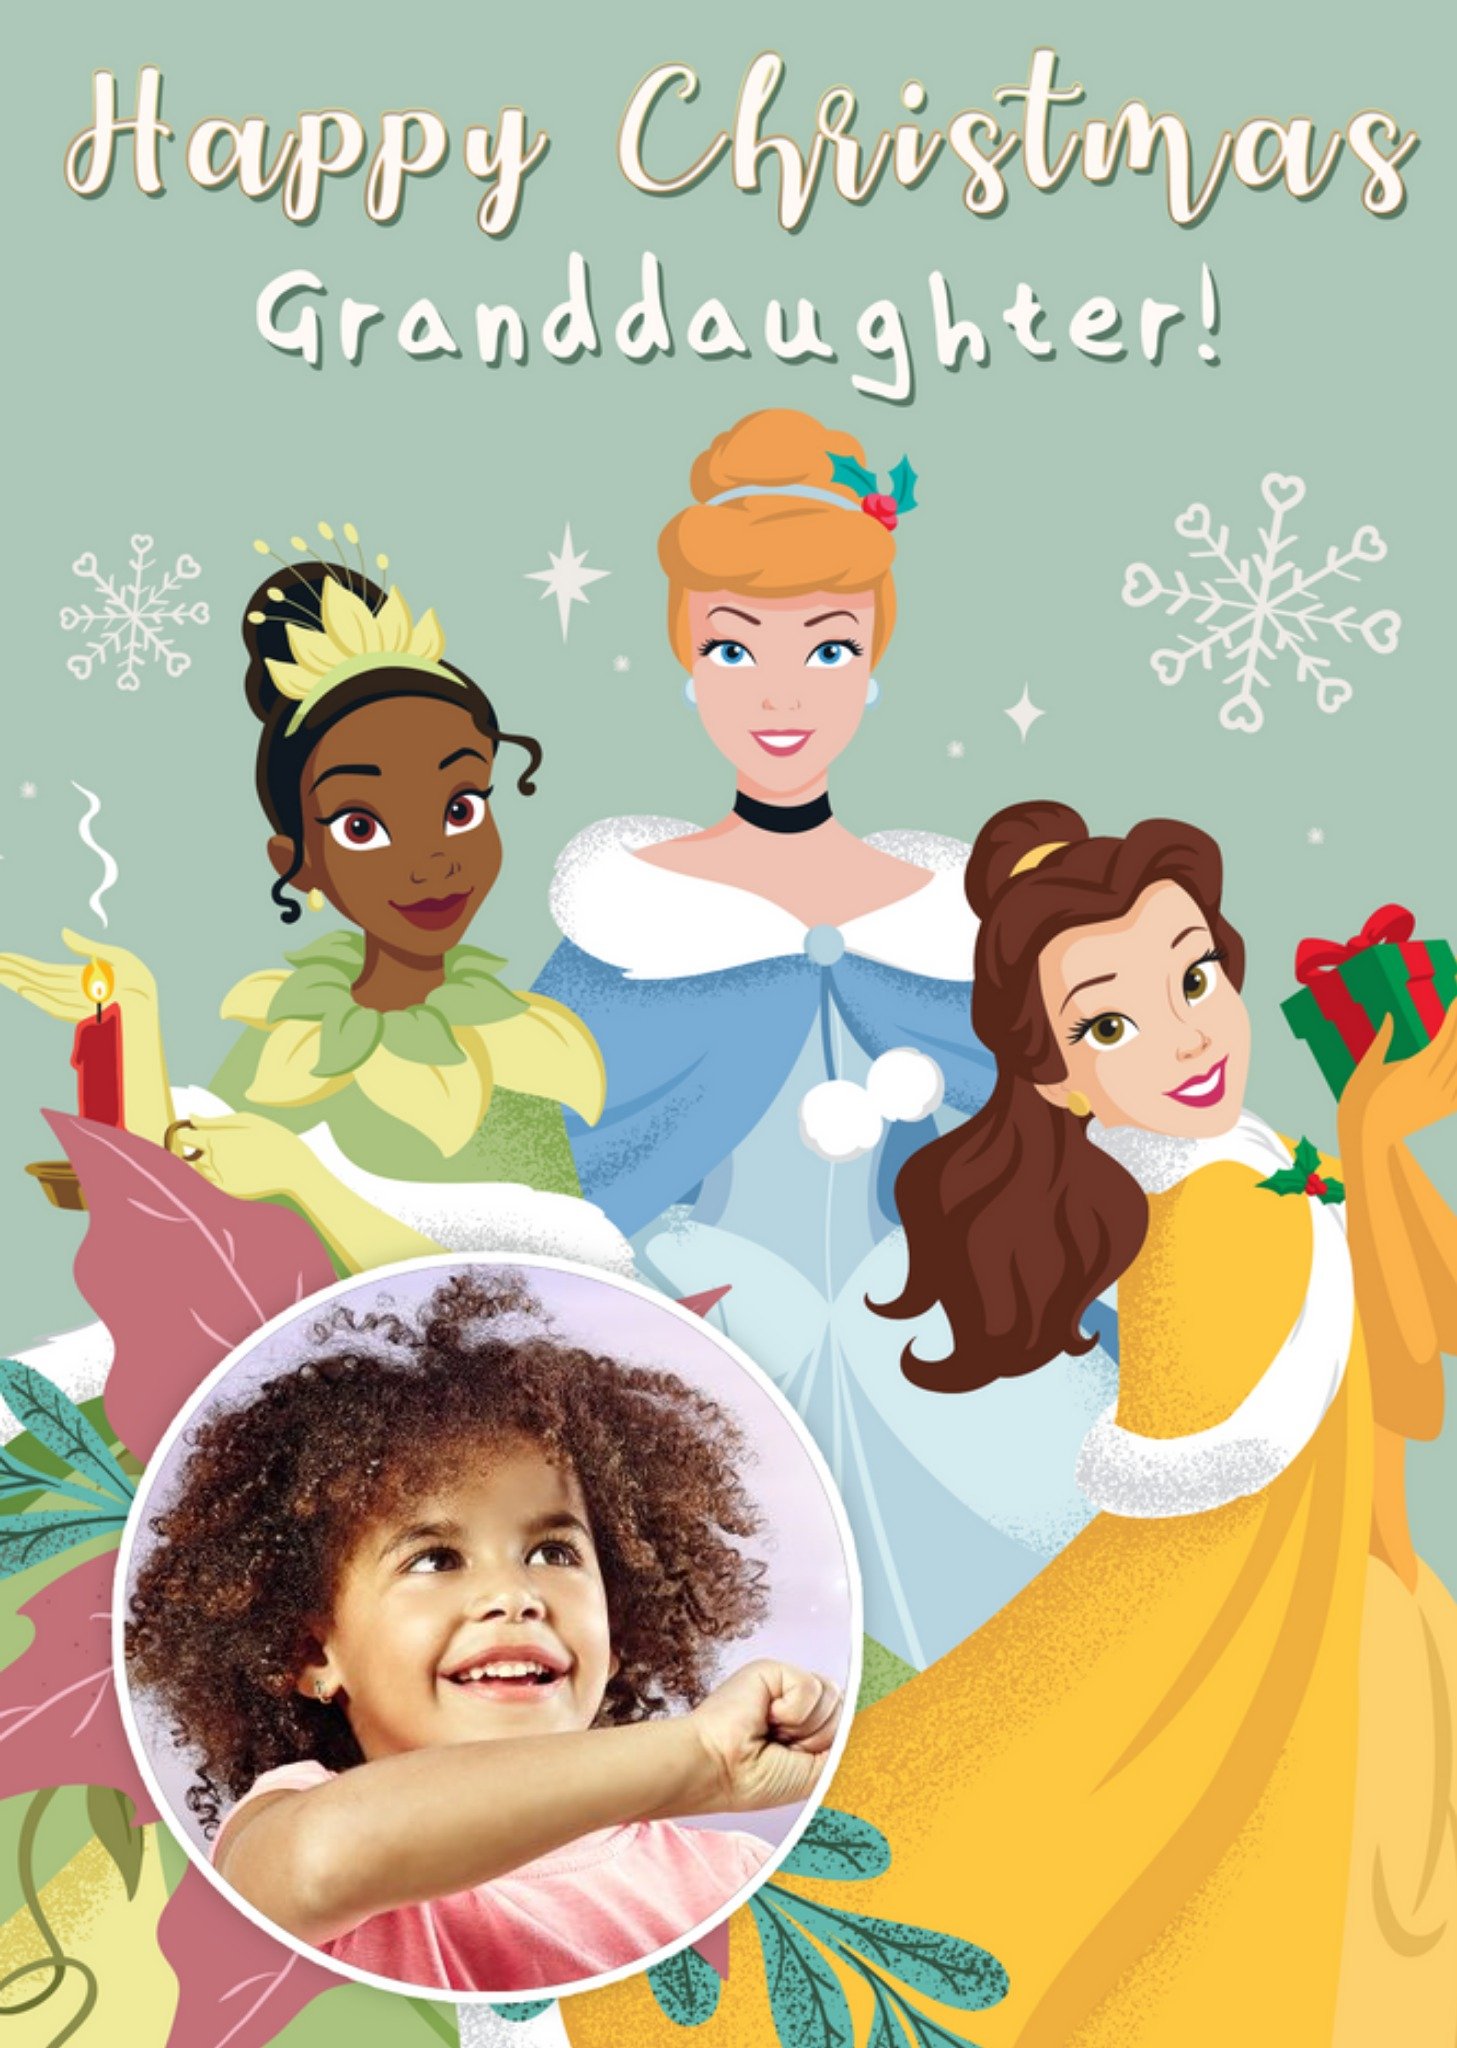 Disney Princesses Tiana, Belle And Cinderella Granddaughter Photo Upload Christmas Card, Large